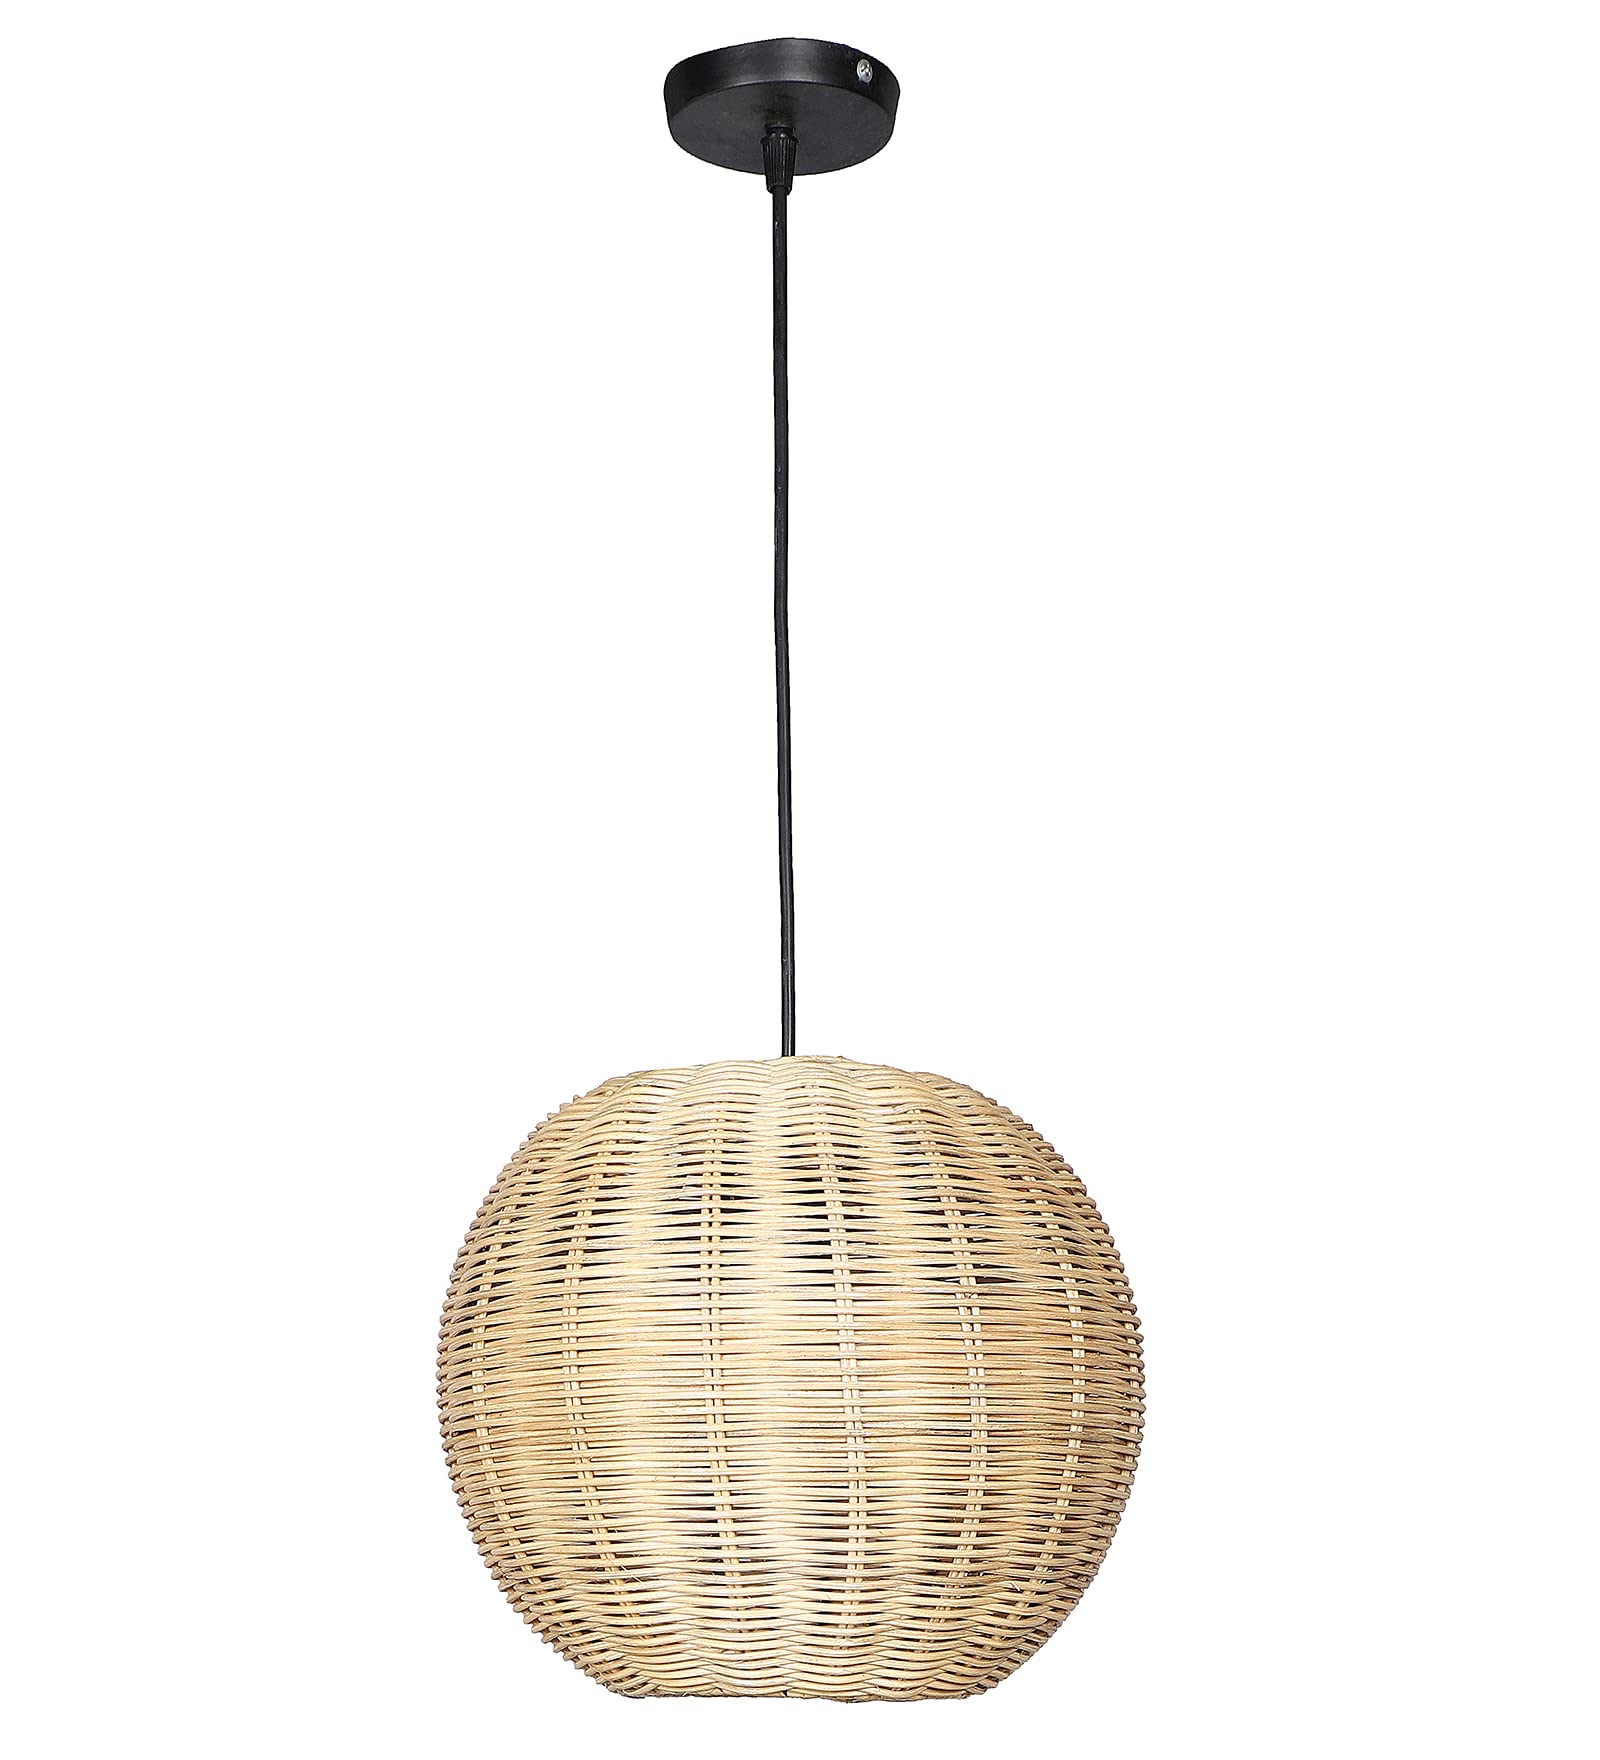 AKWAY Wicker Bamboo Cane Rattan Seagrass Kauna Grass Wicker Lamp Premium Ceiling Light/Pendant Light Handwoven - 1 Piece (8" Dia x 8'H) (Beige) (Bulb not Included) - Akway